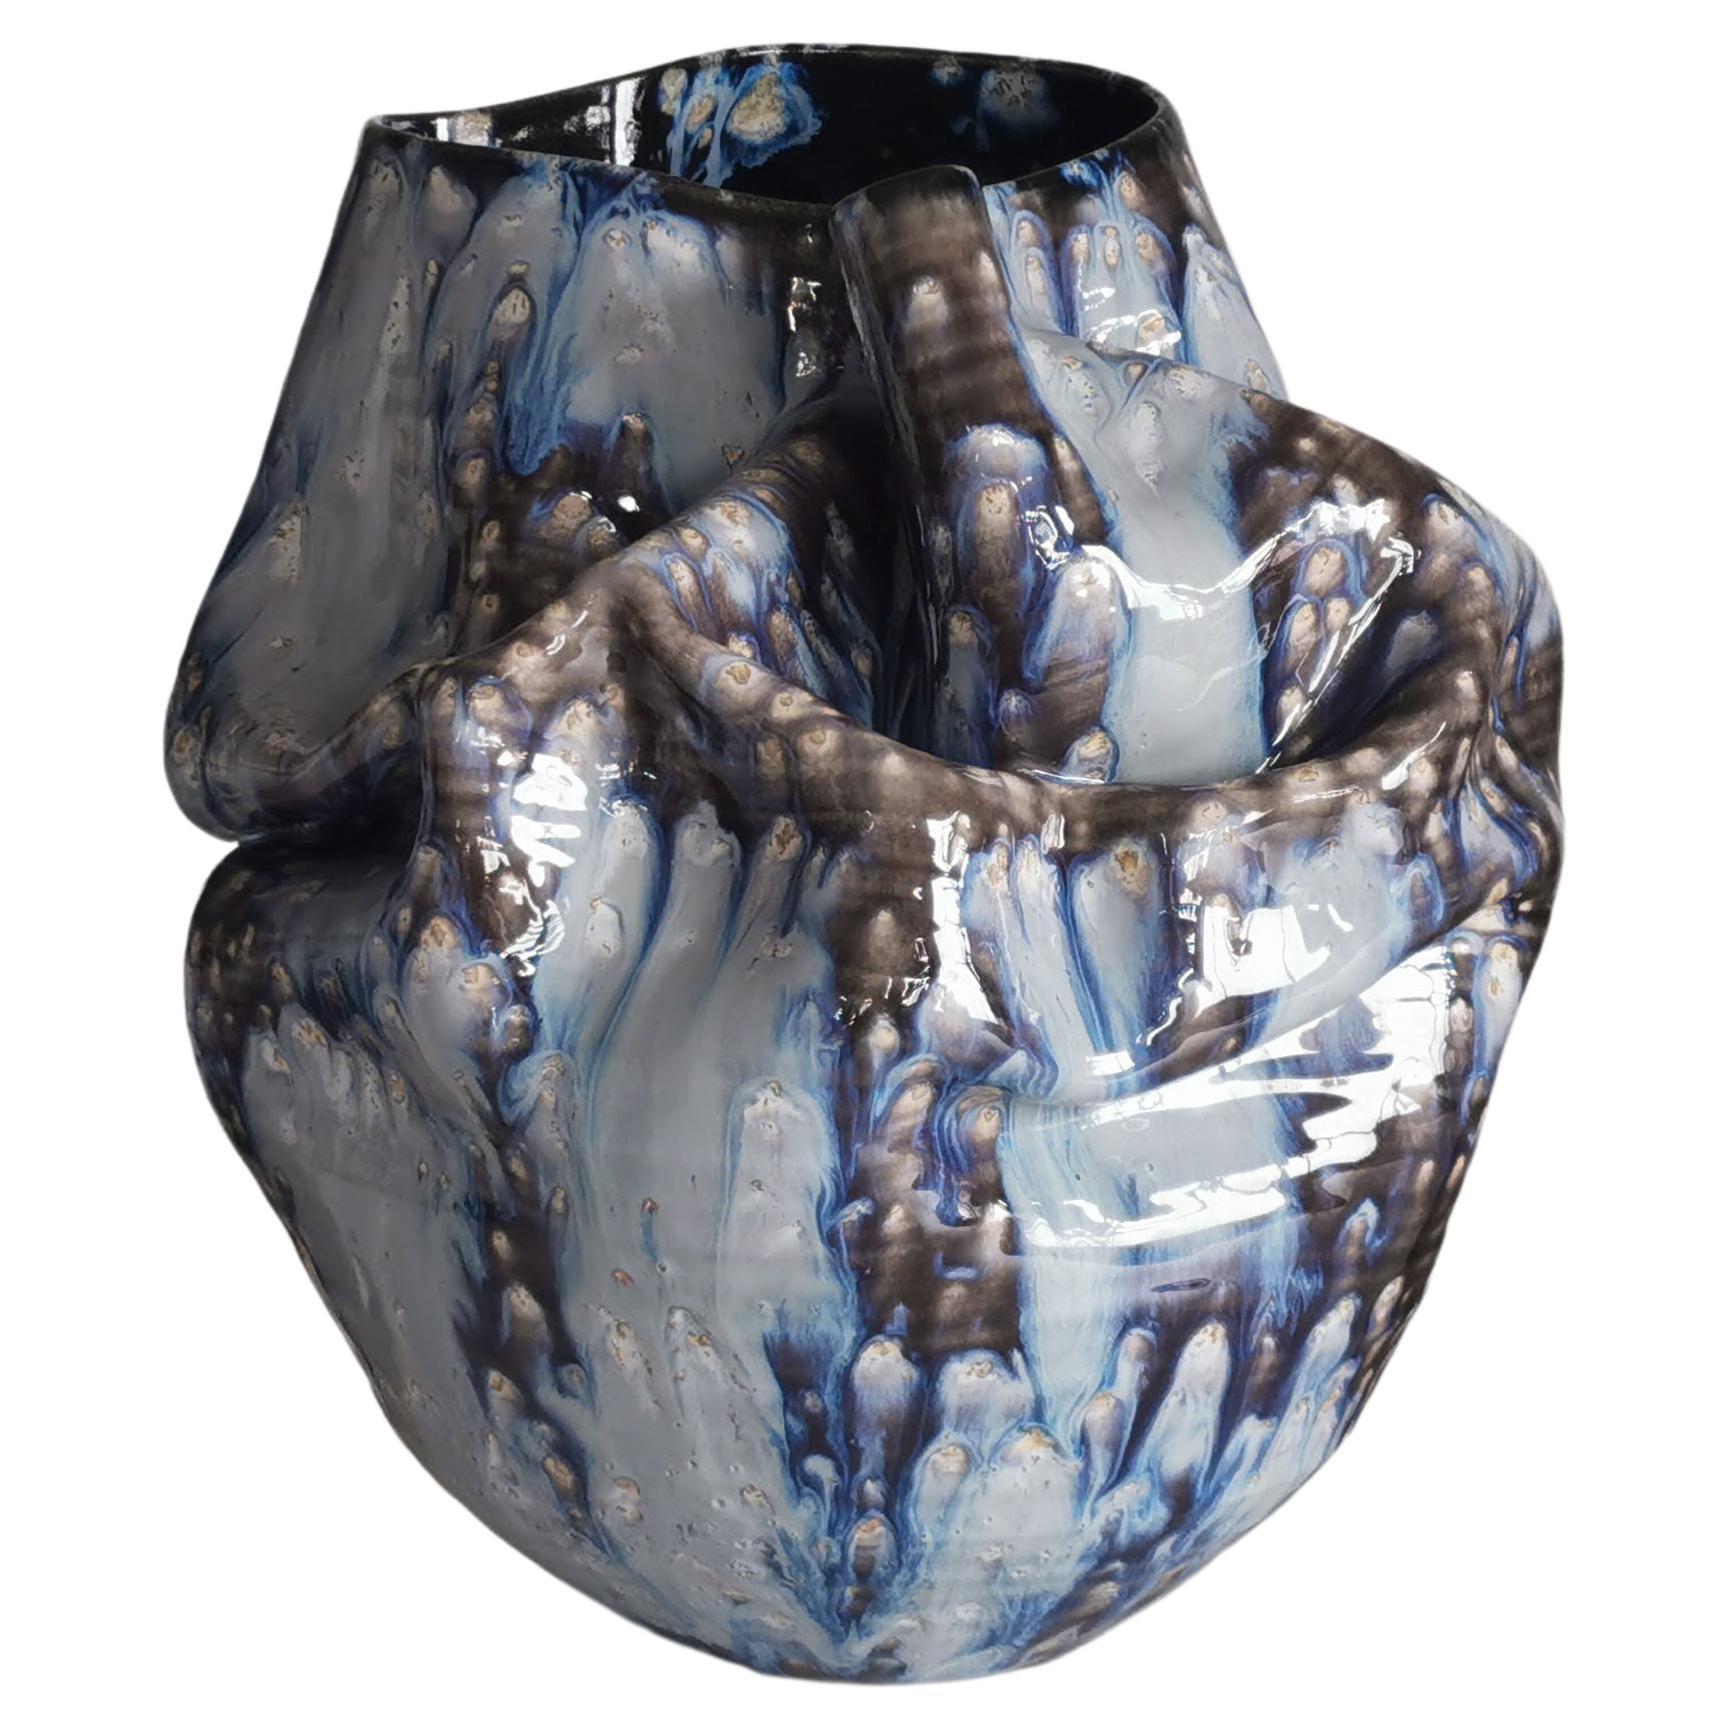 Medium Undulating Form Galaxy Blue Glaze, Unique Ceramic Sculpture Vessel N.78